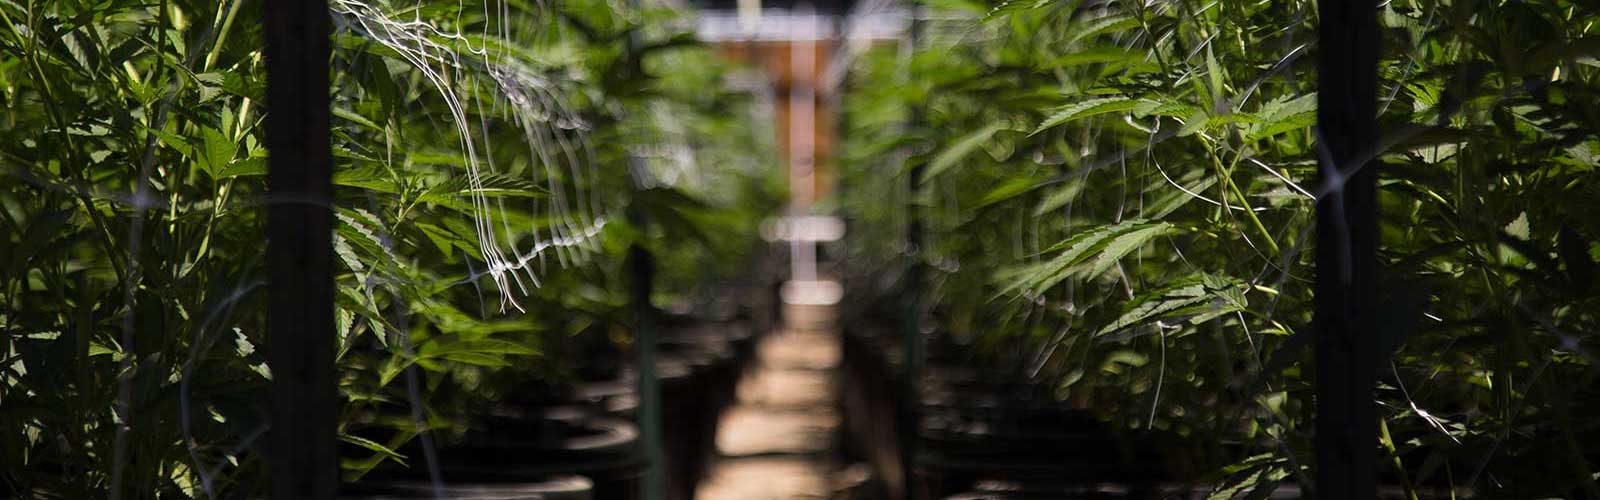 Row of cannabis plants